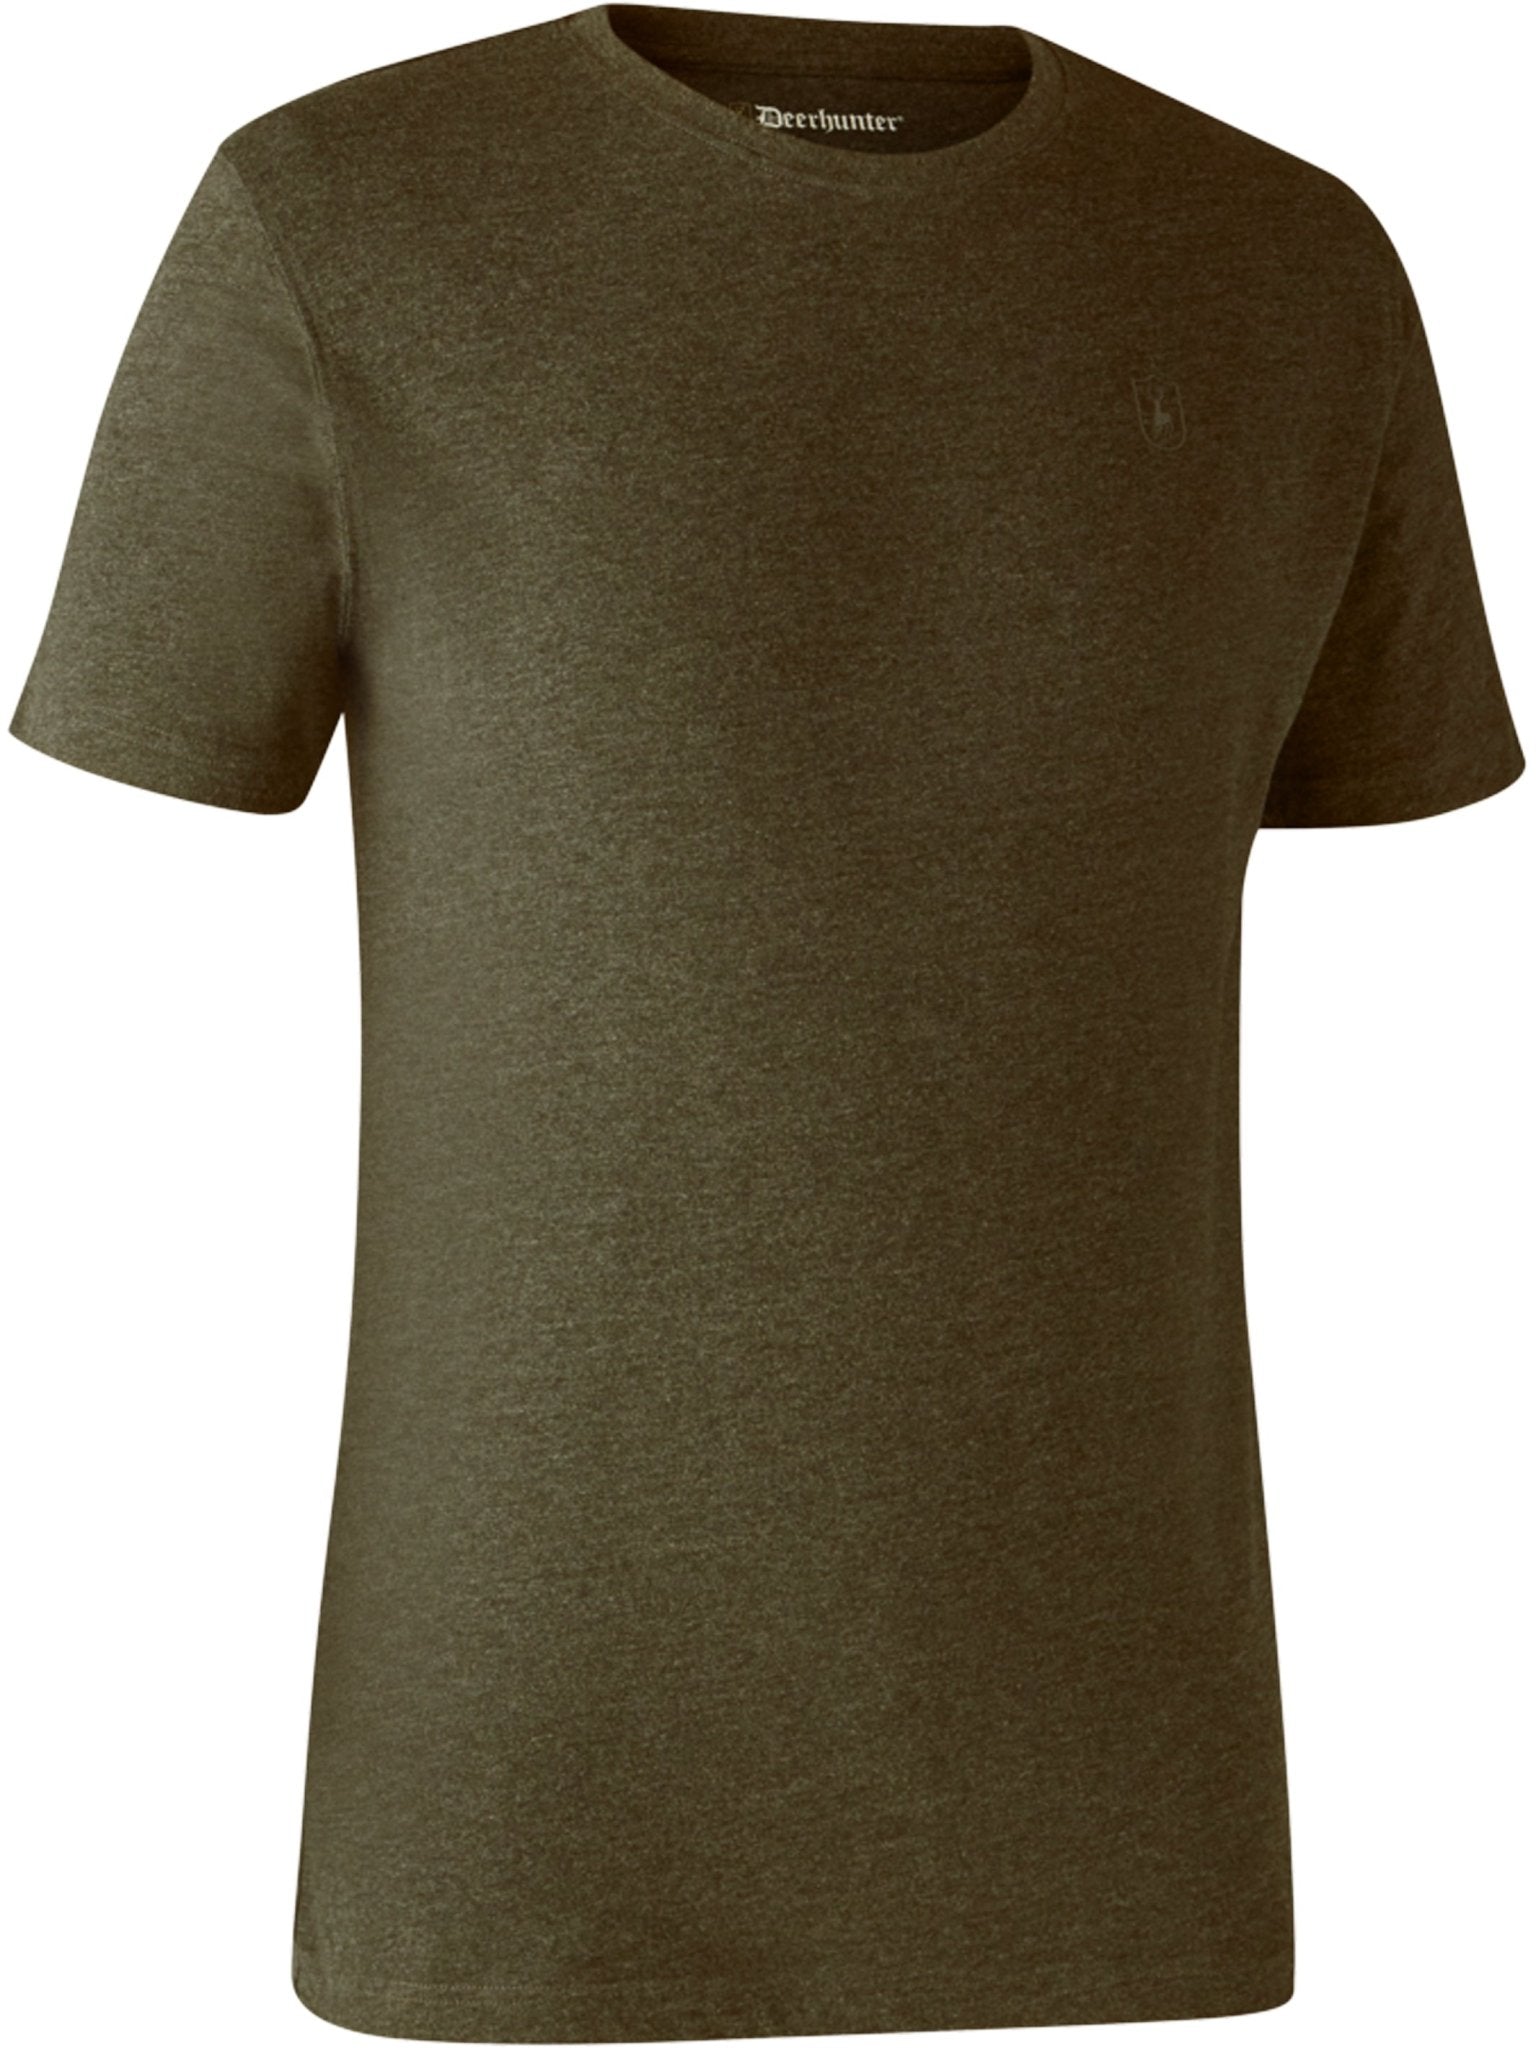 4elementsclothingDeerhunterDeerhunter - Mens T-shirts packs (Twin pack / gift box) - 2 Pack / Mens teesT-Shirt8394-354-S